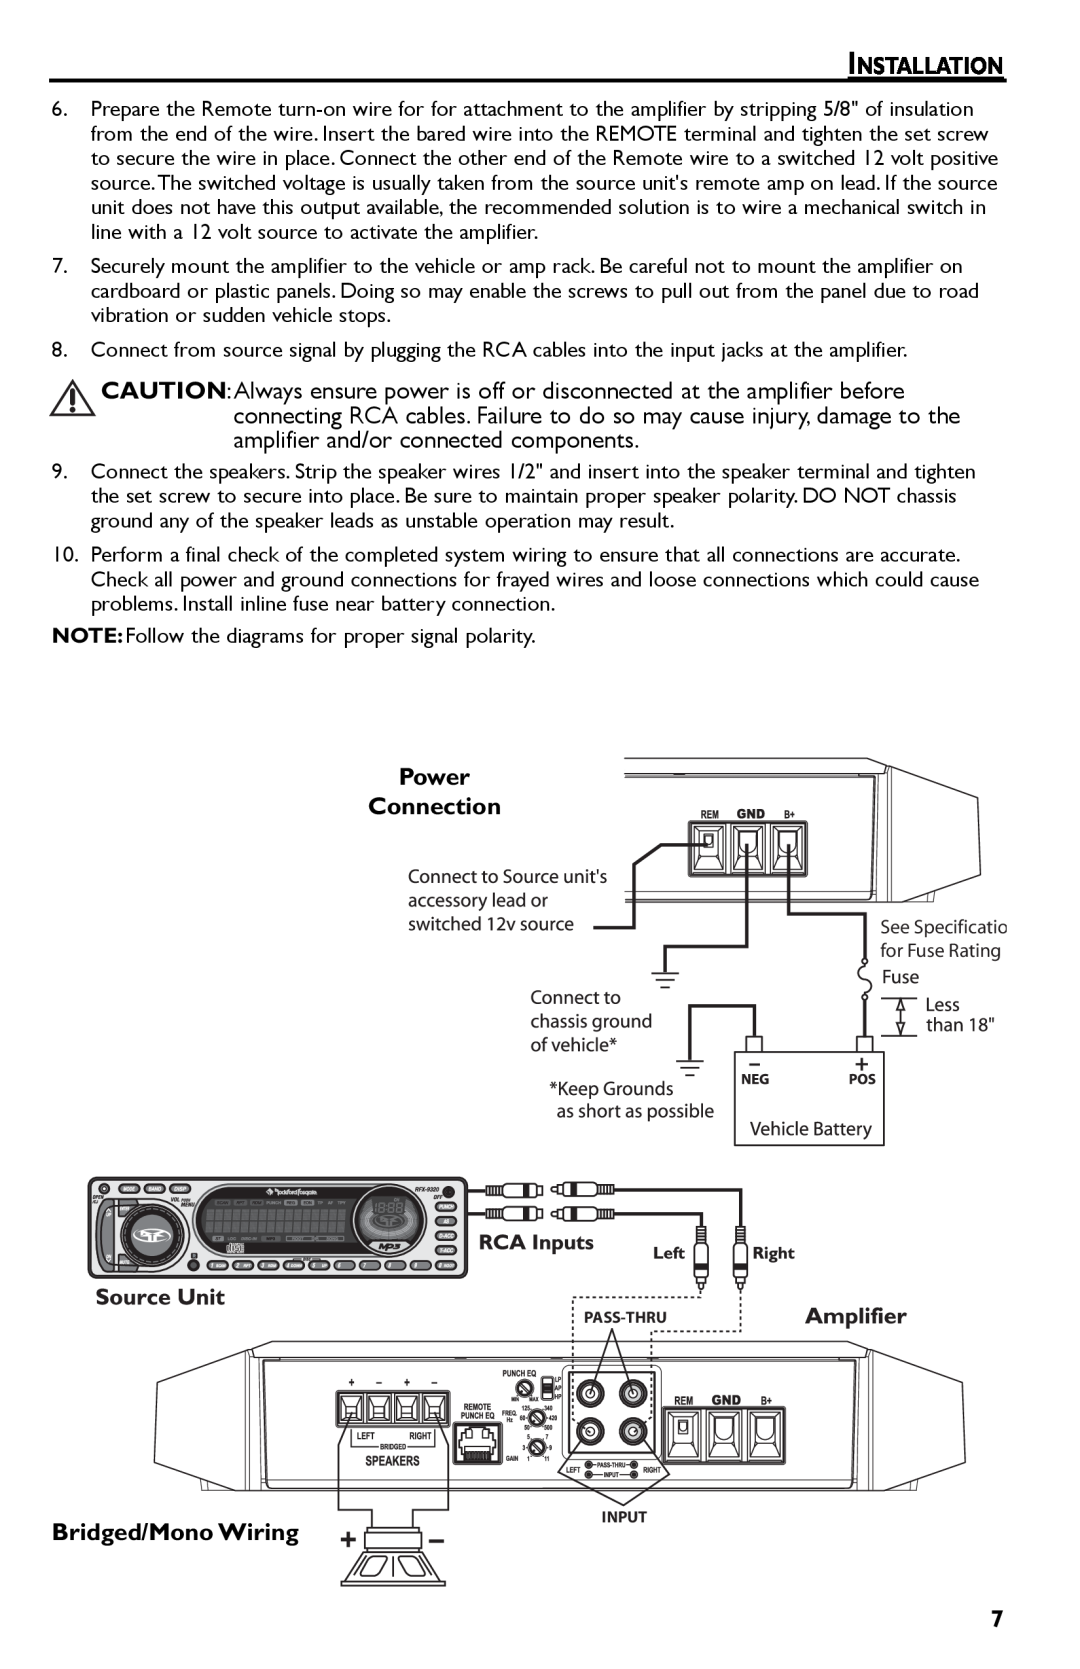 Rockford Fosgate T400-2, T600-2 manual Installation, Power Connection, Bridged/Mono Wiring, Pass-Thru Input 